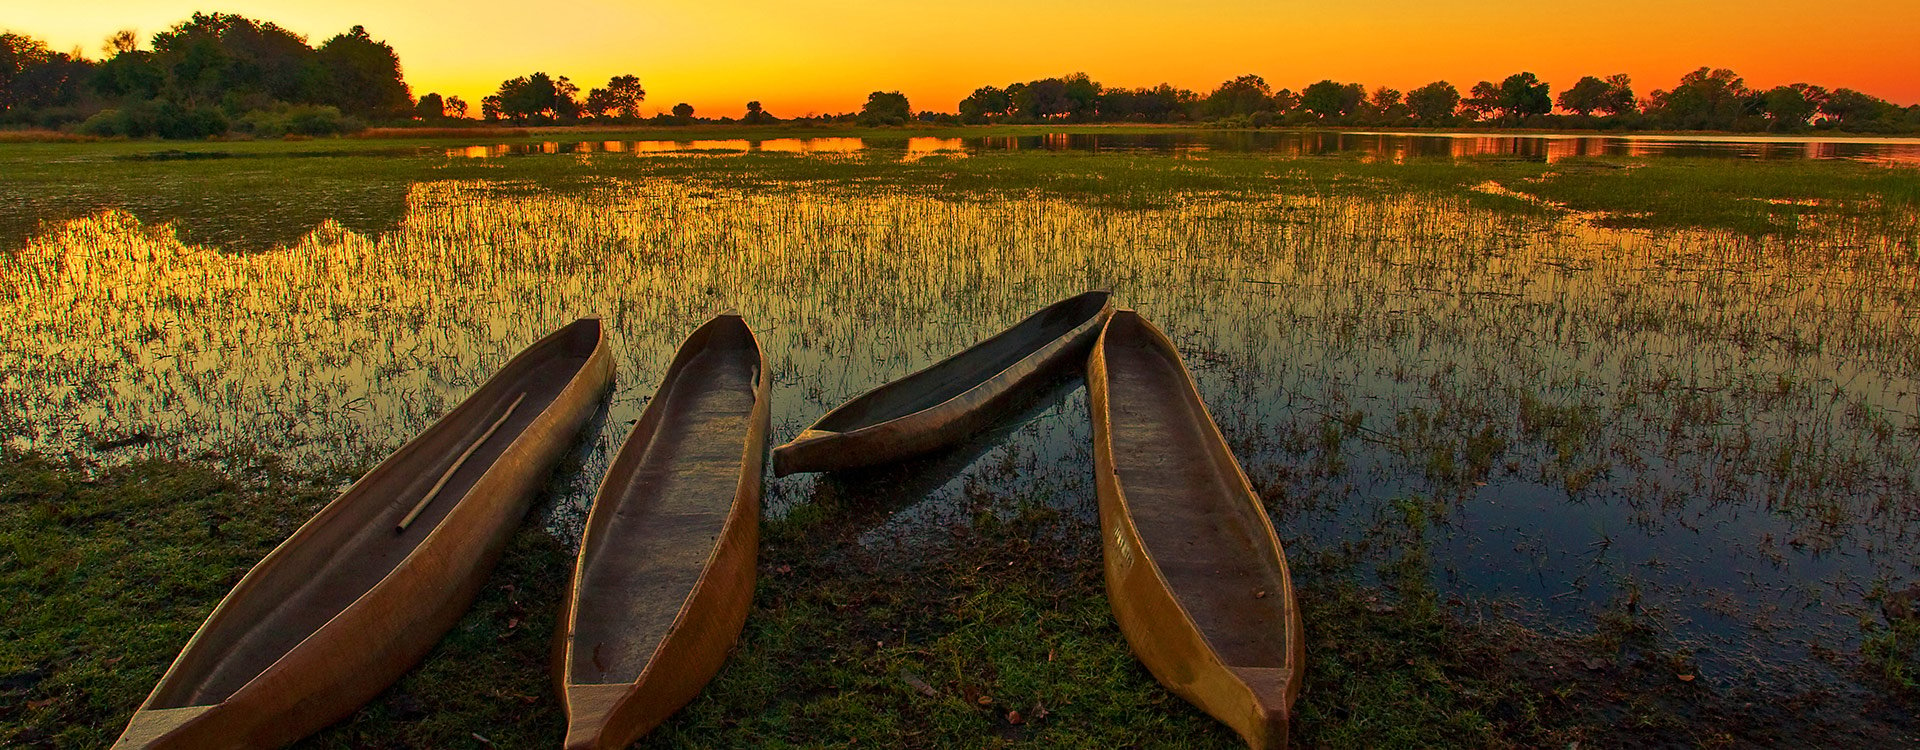 Botswana_Okavango_Sunrise